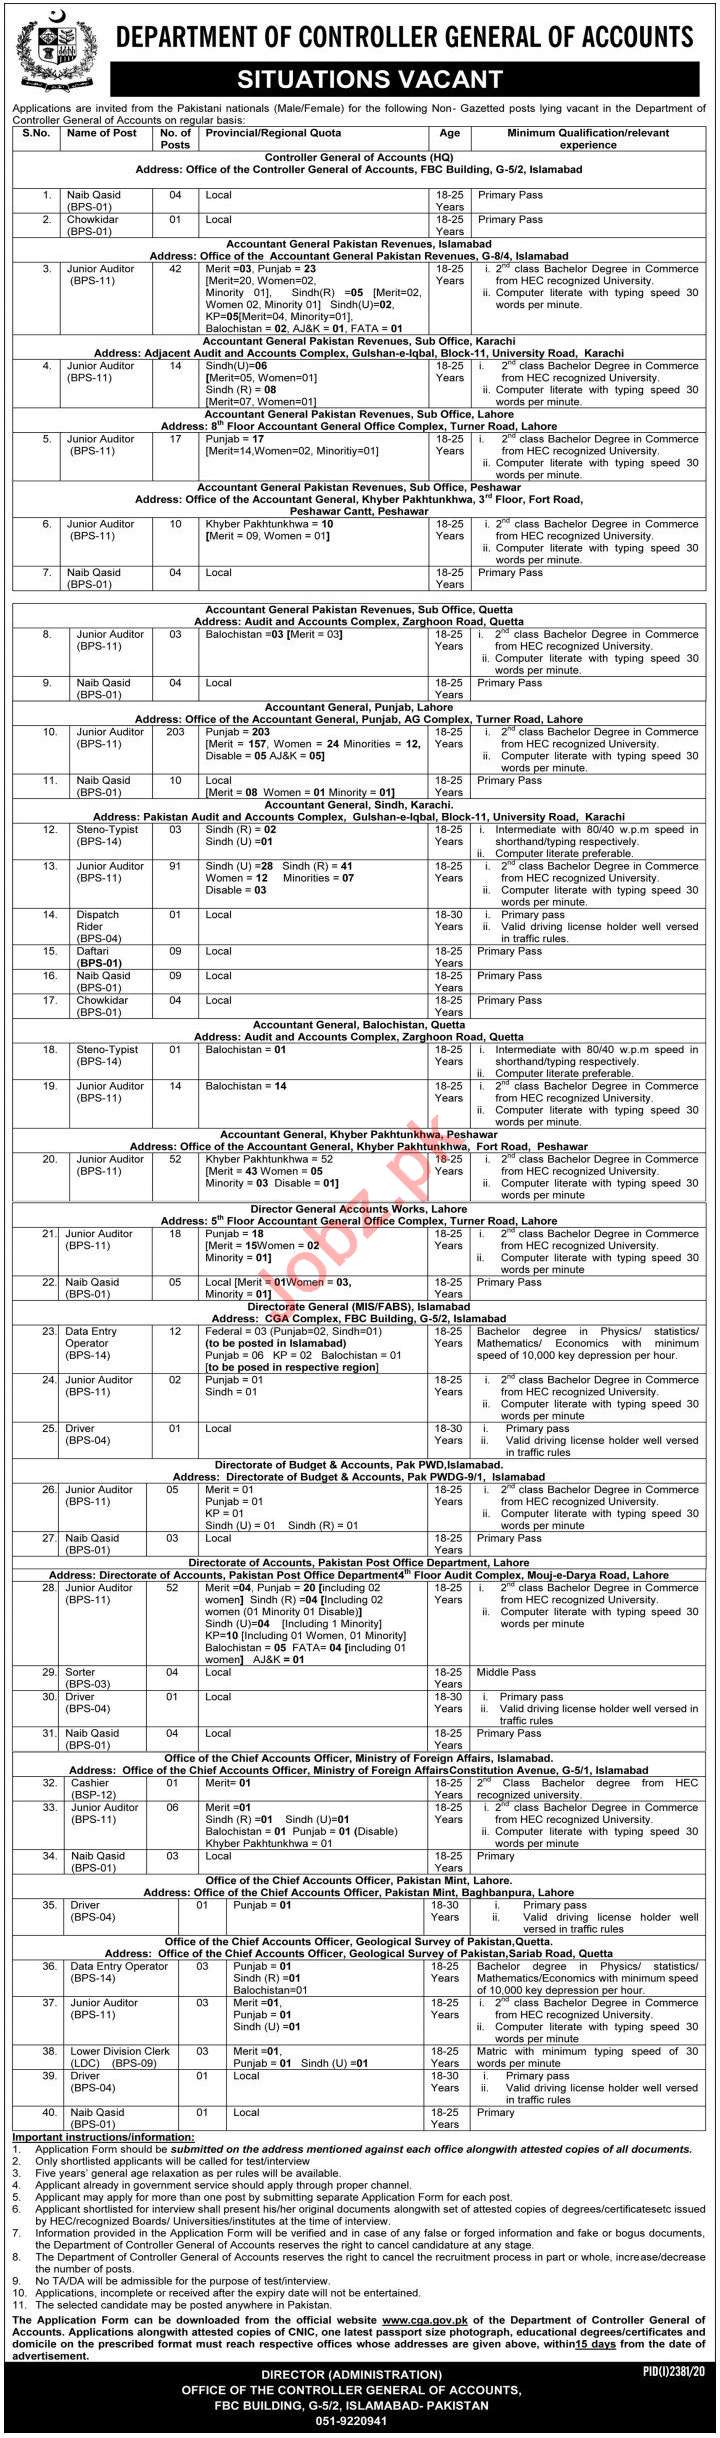 Controller General of Accounts CGA November 2020 Latest Jobs in Pakistan 2020 - Download Job Application Form - www.cga.gov.pk